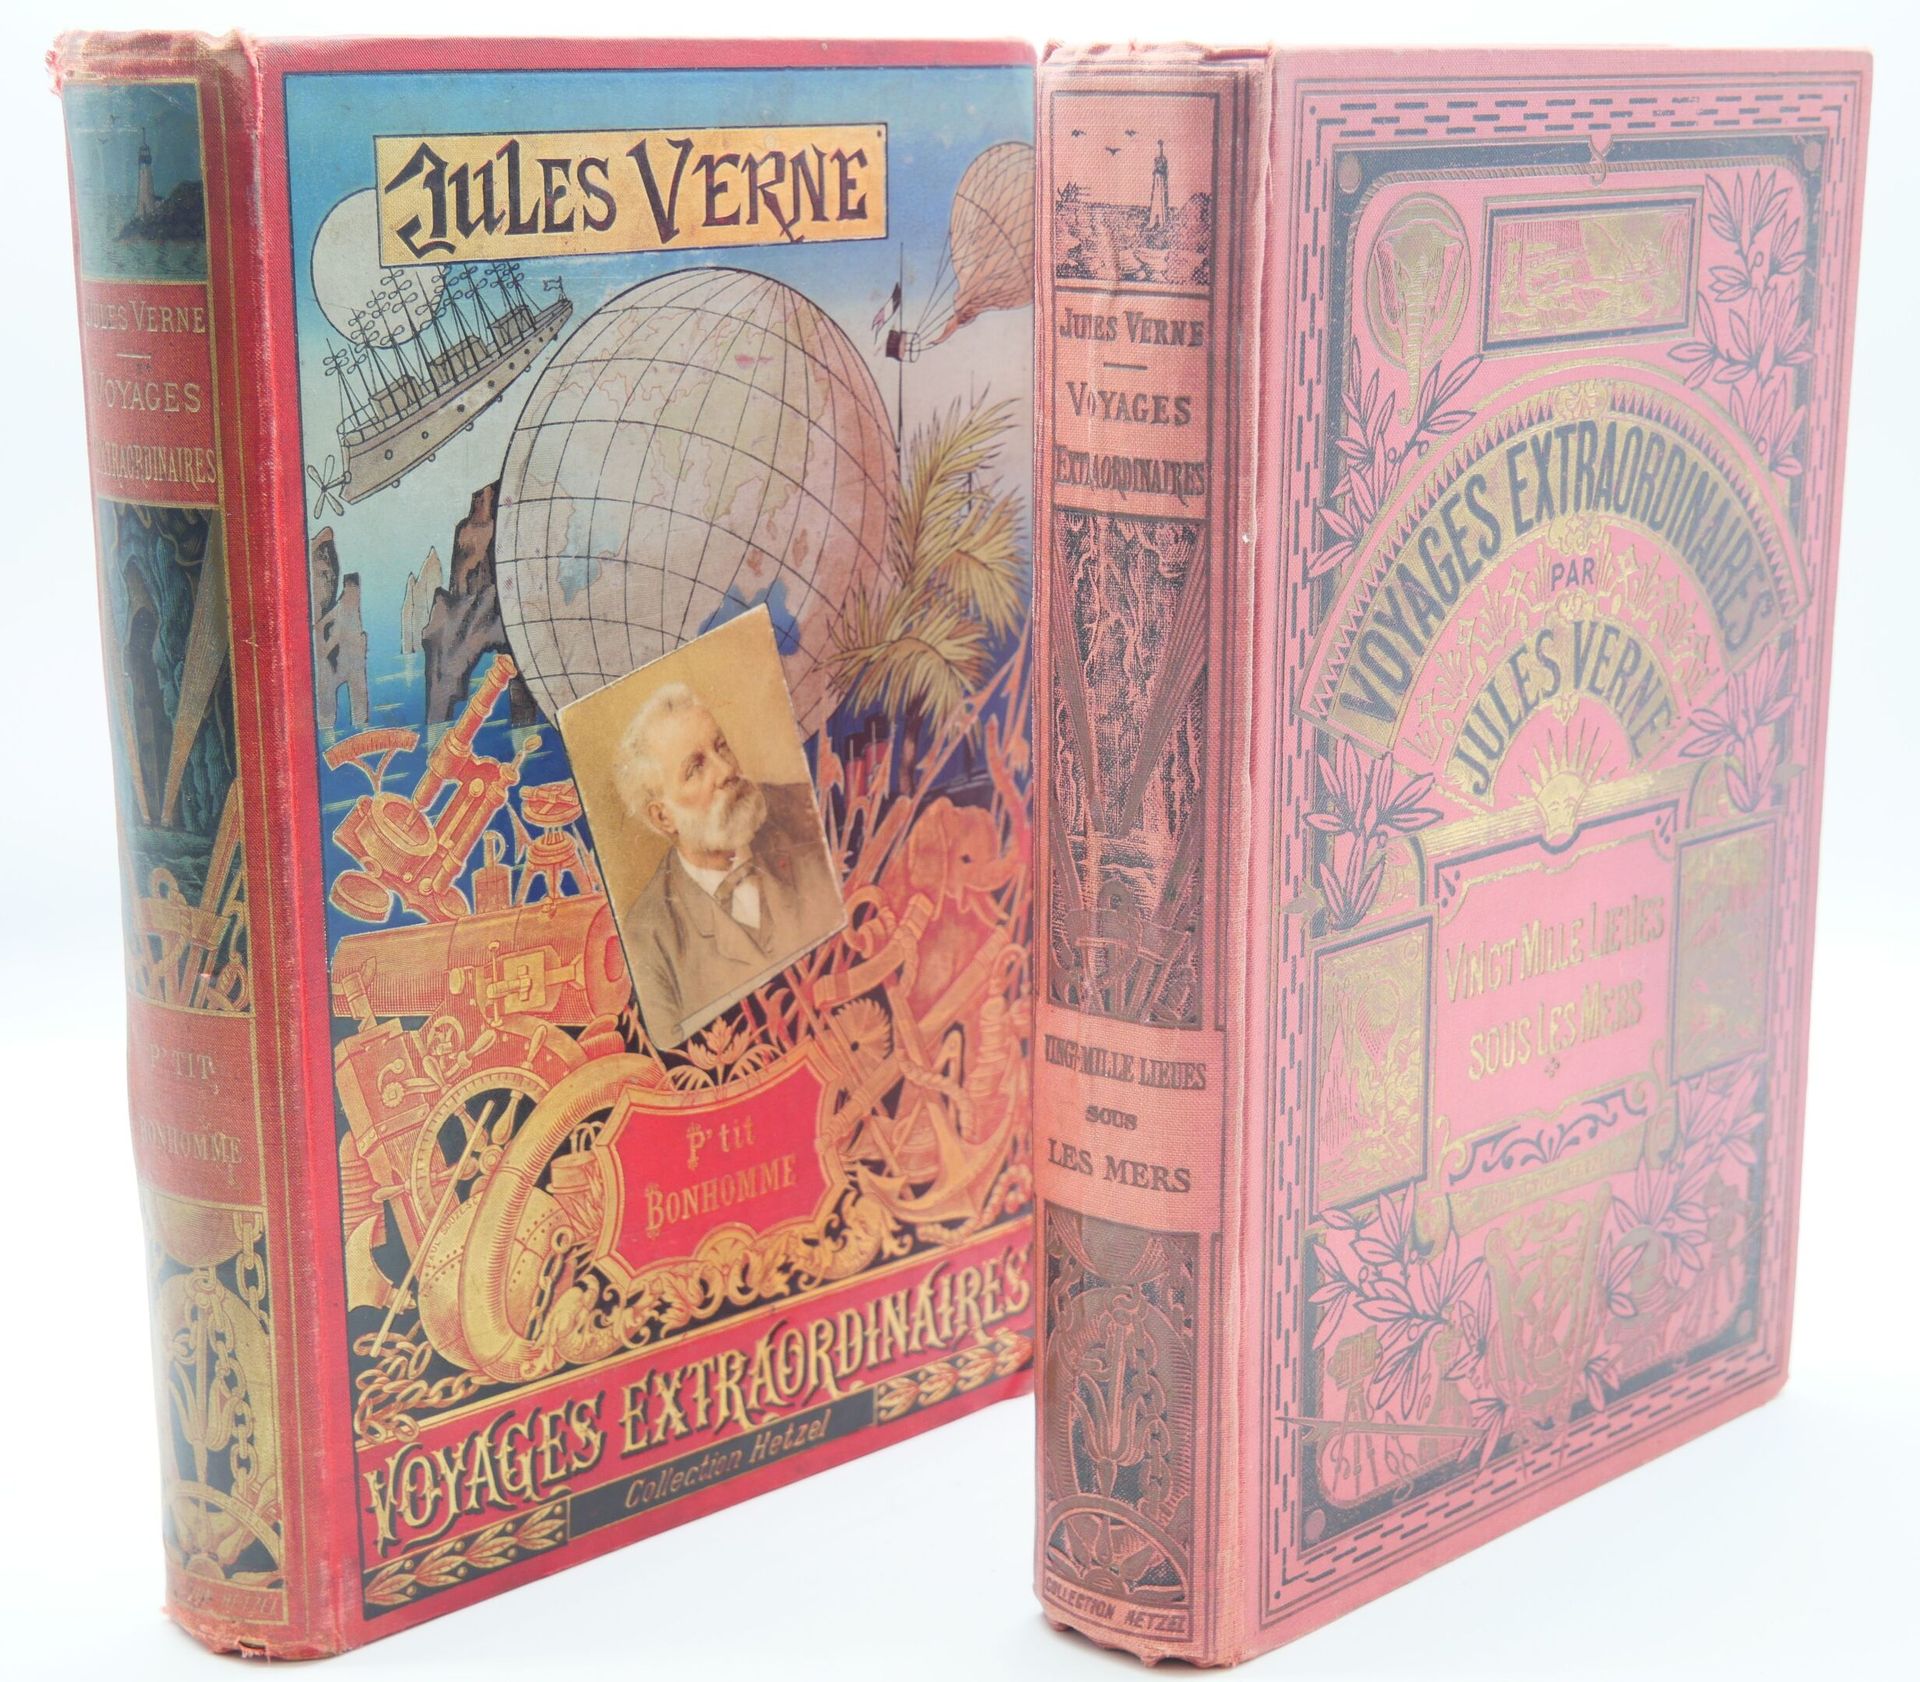 Null VERNE Jules. Conjunto de 2 volúmenes.
Voyages Extraordinaires, P'tit-Bonhom&hellip;